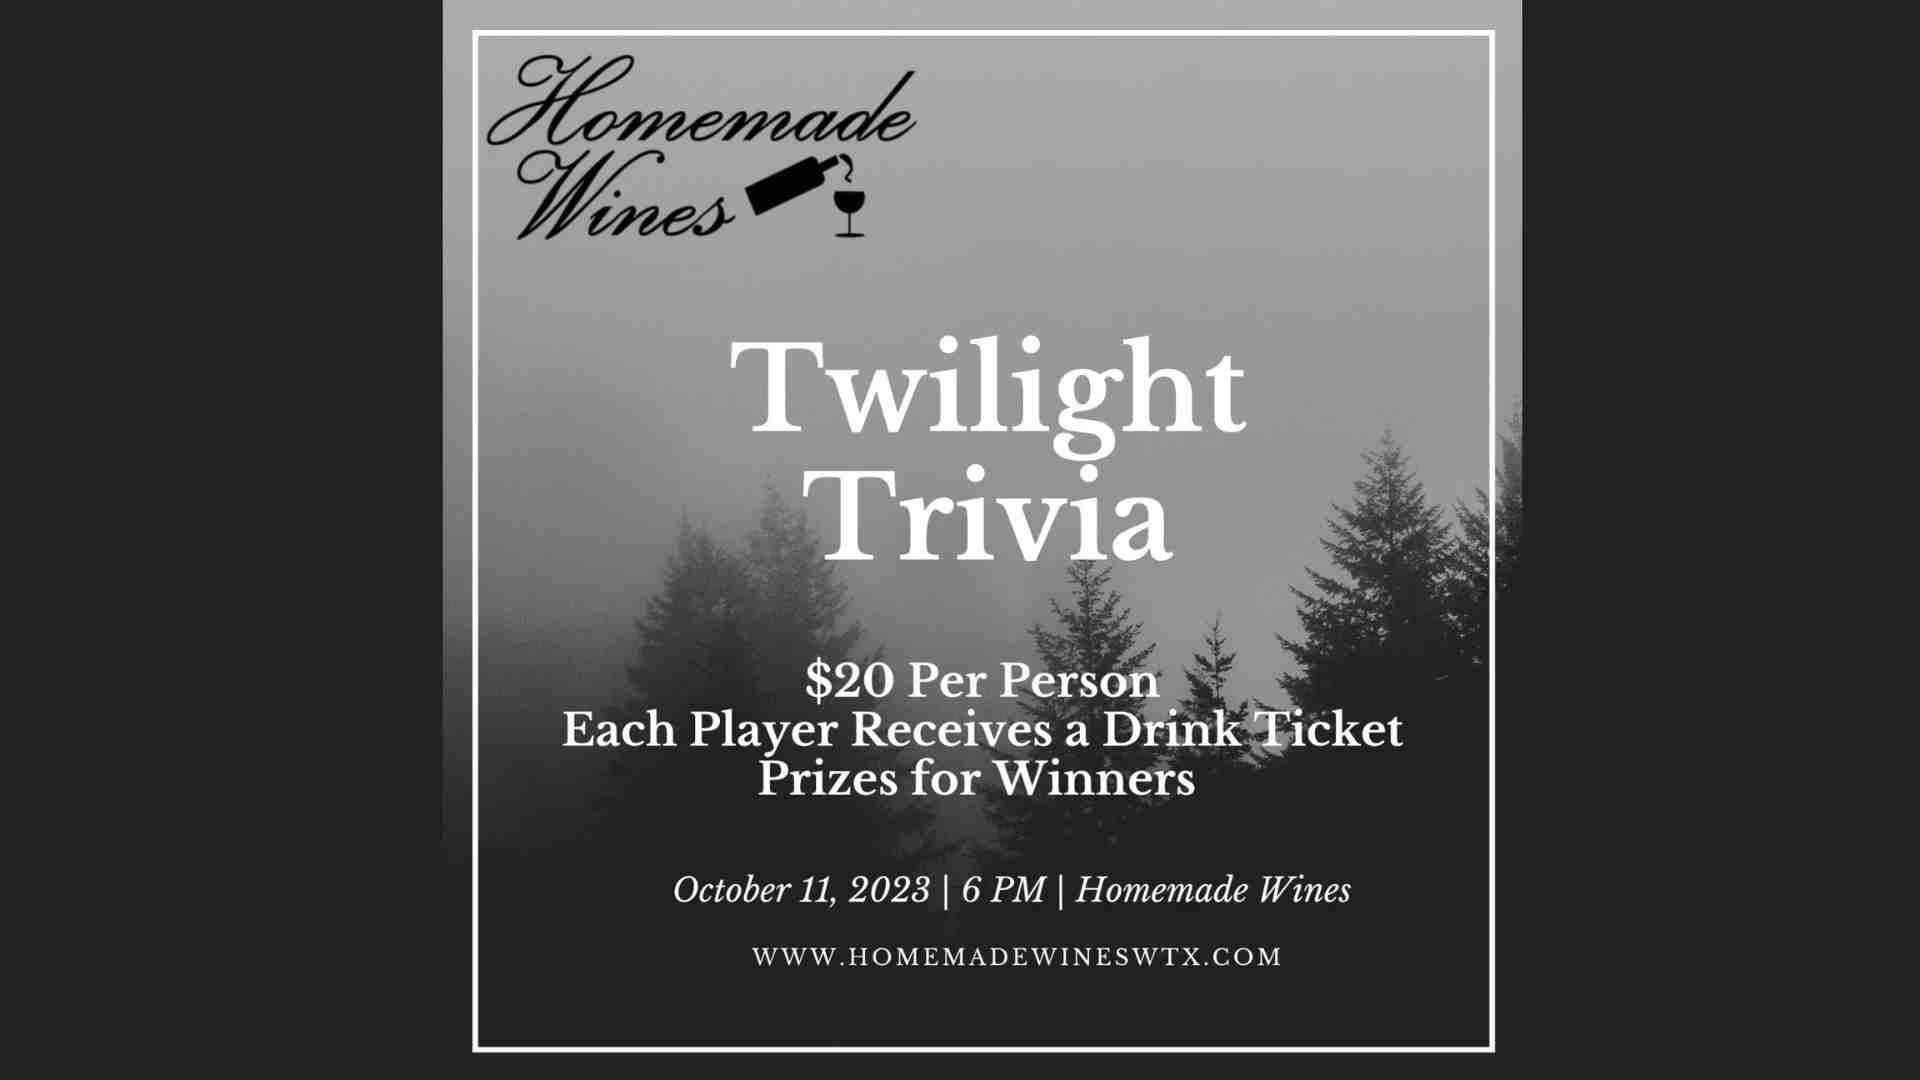 Twilight Trivia at Homemade Wines on October 11, 2023 in Odessa, TX